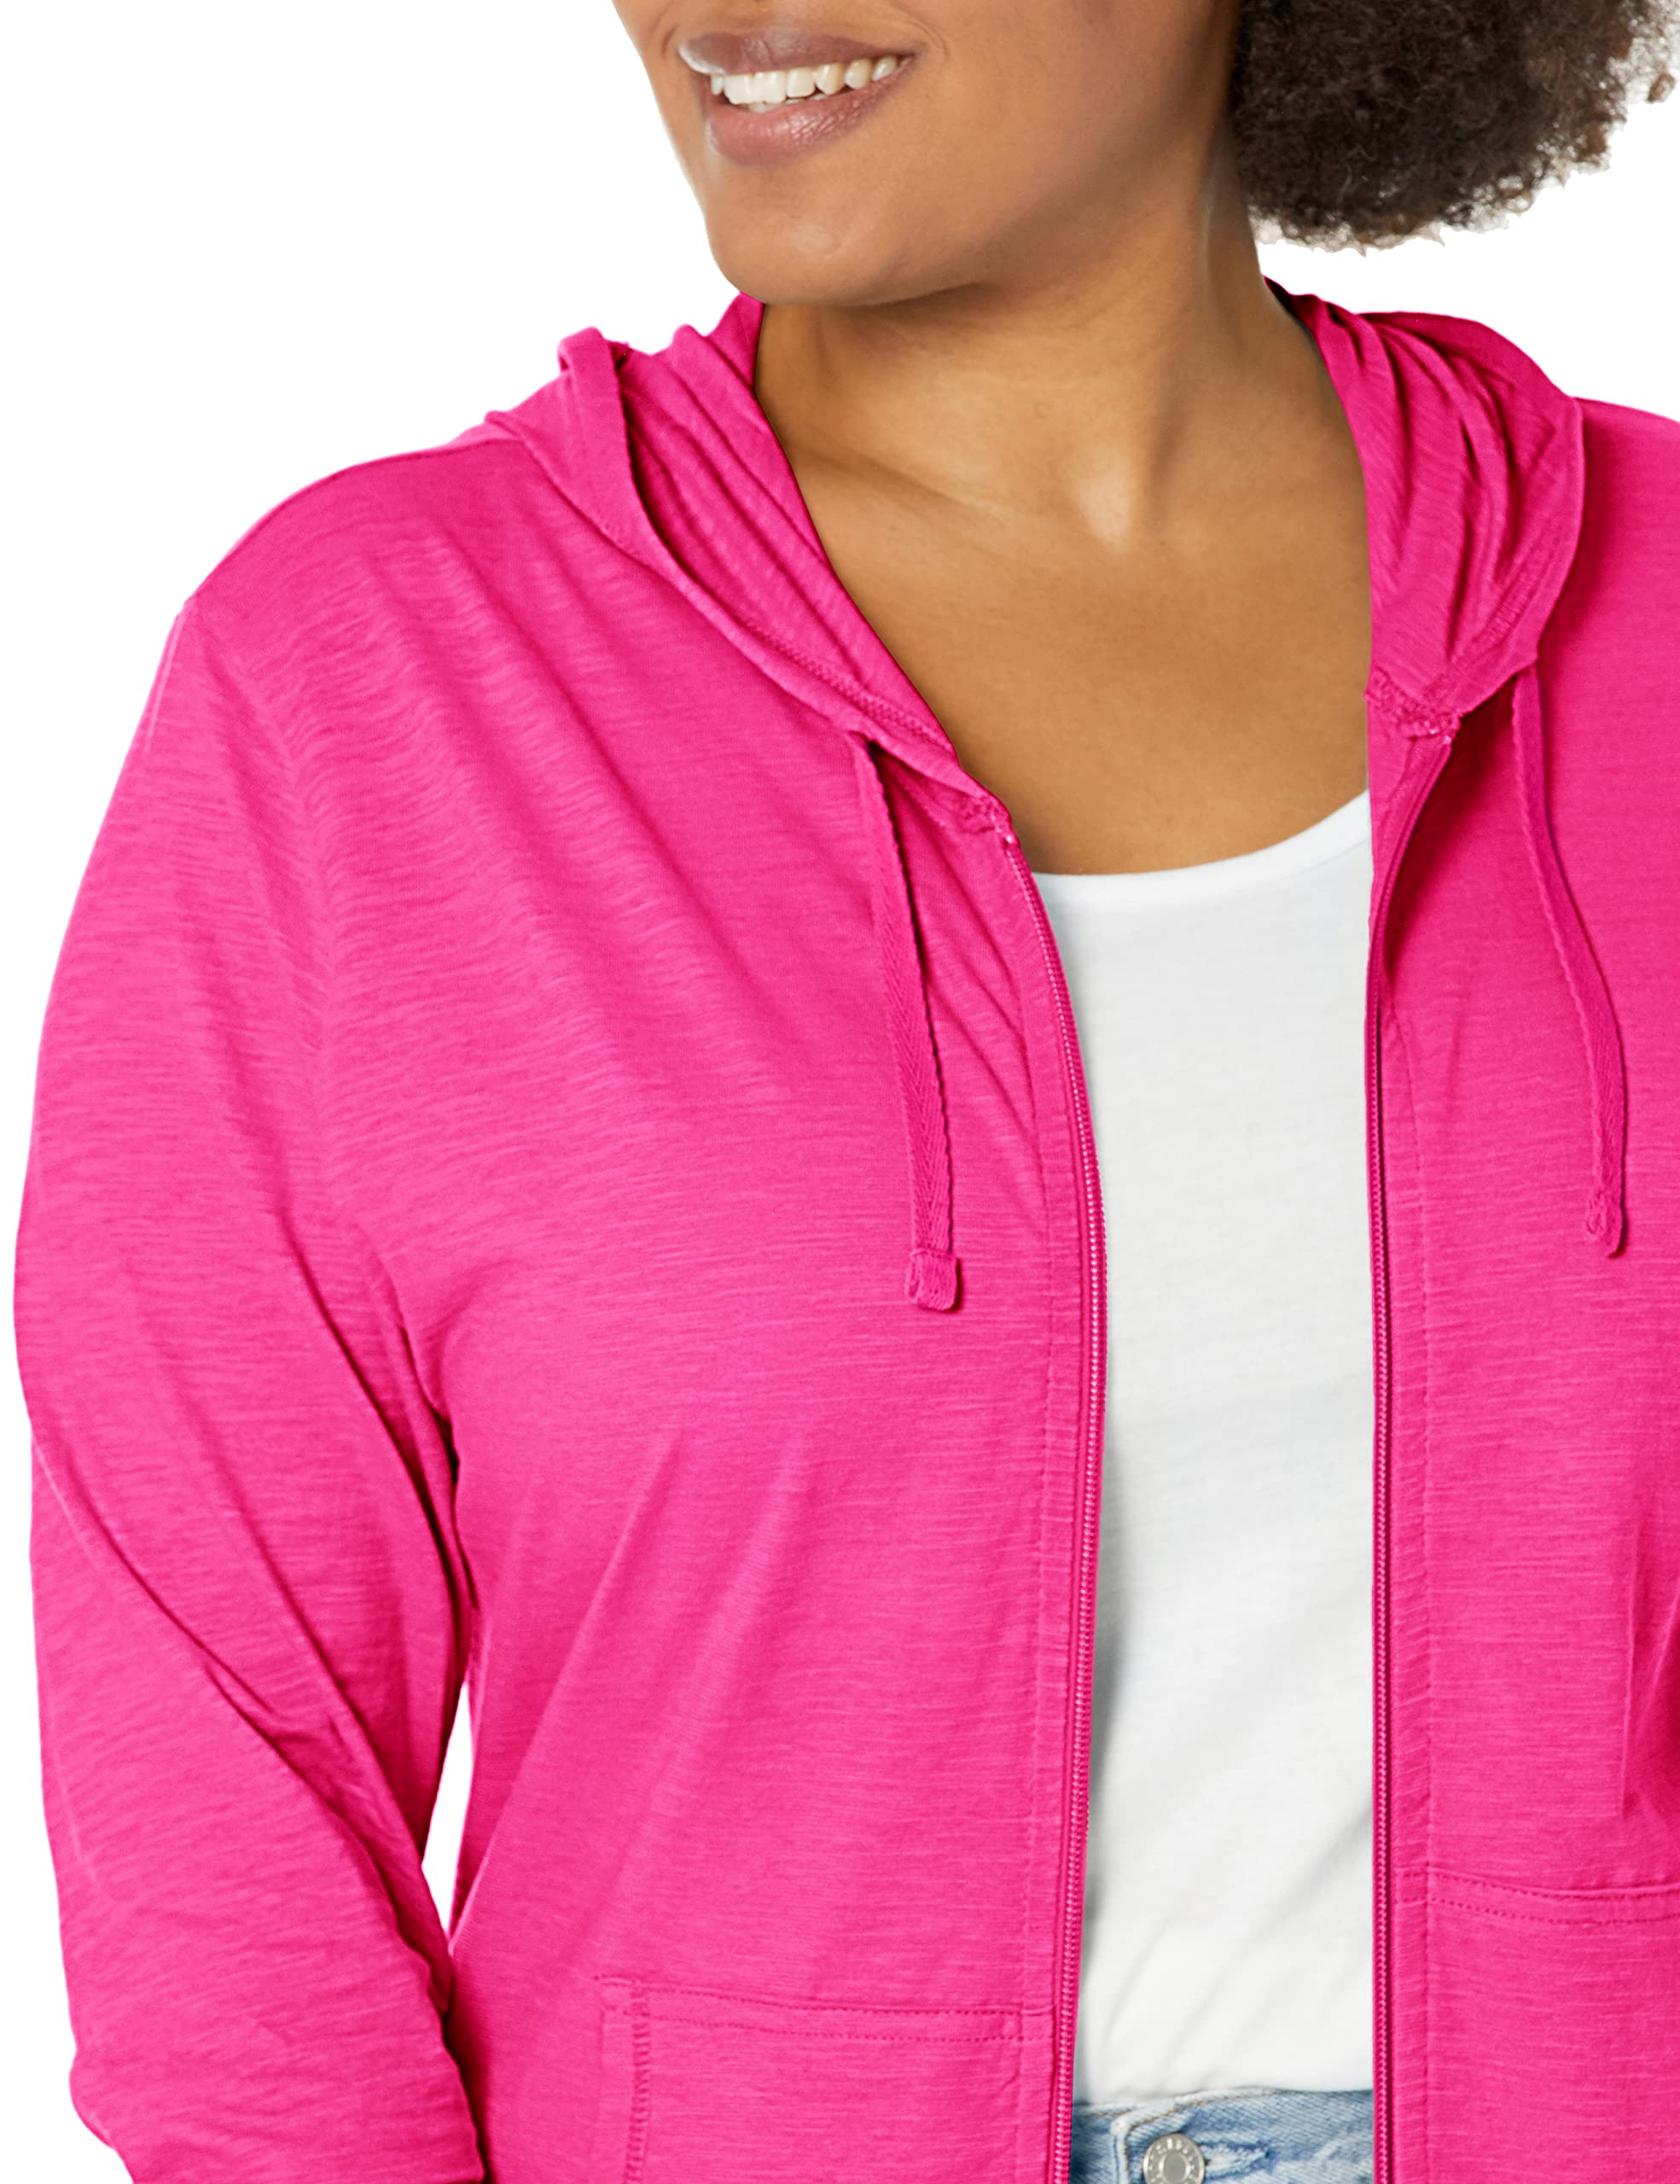 Hanes Women’s Slub Knit Full-Zip Hoodie, Textured Cotton Zip-Up T-Shirt Hoodie for Women